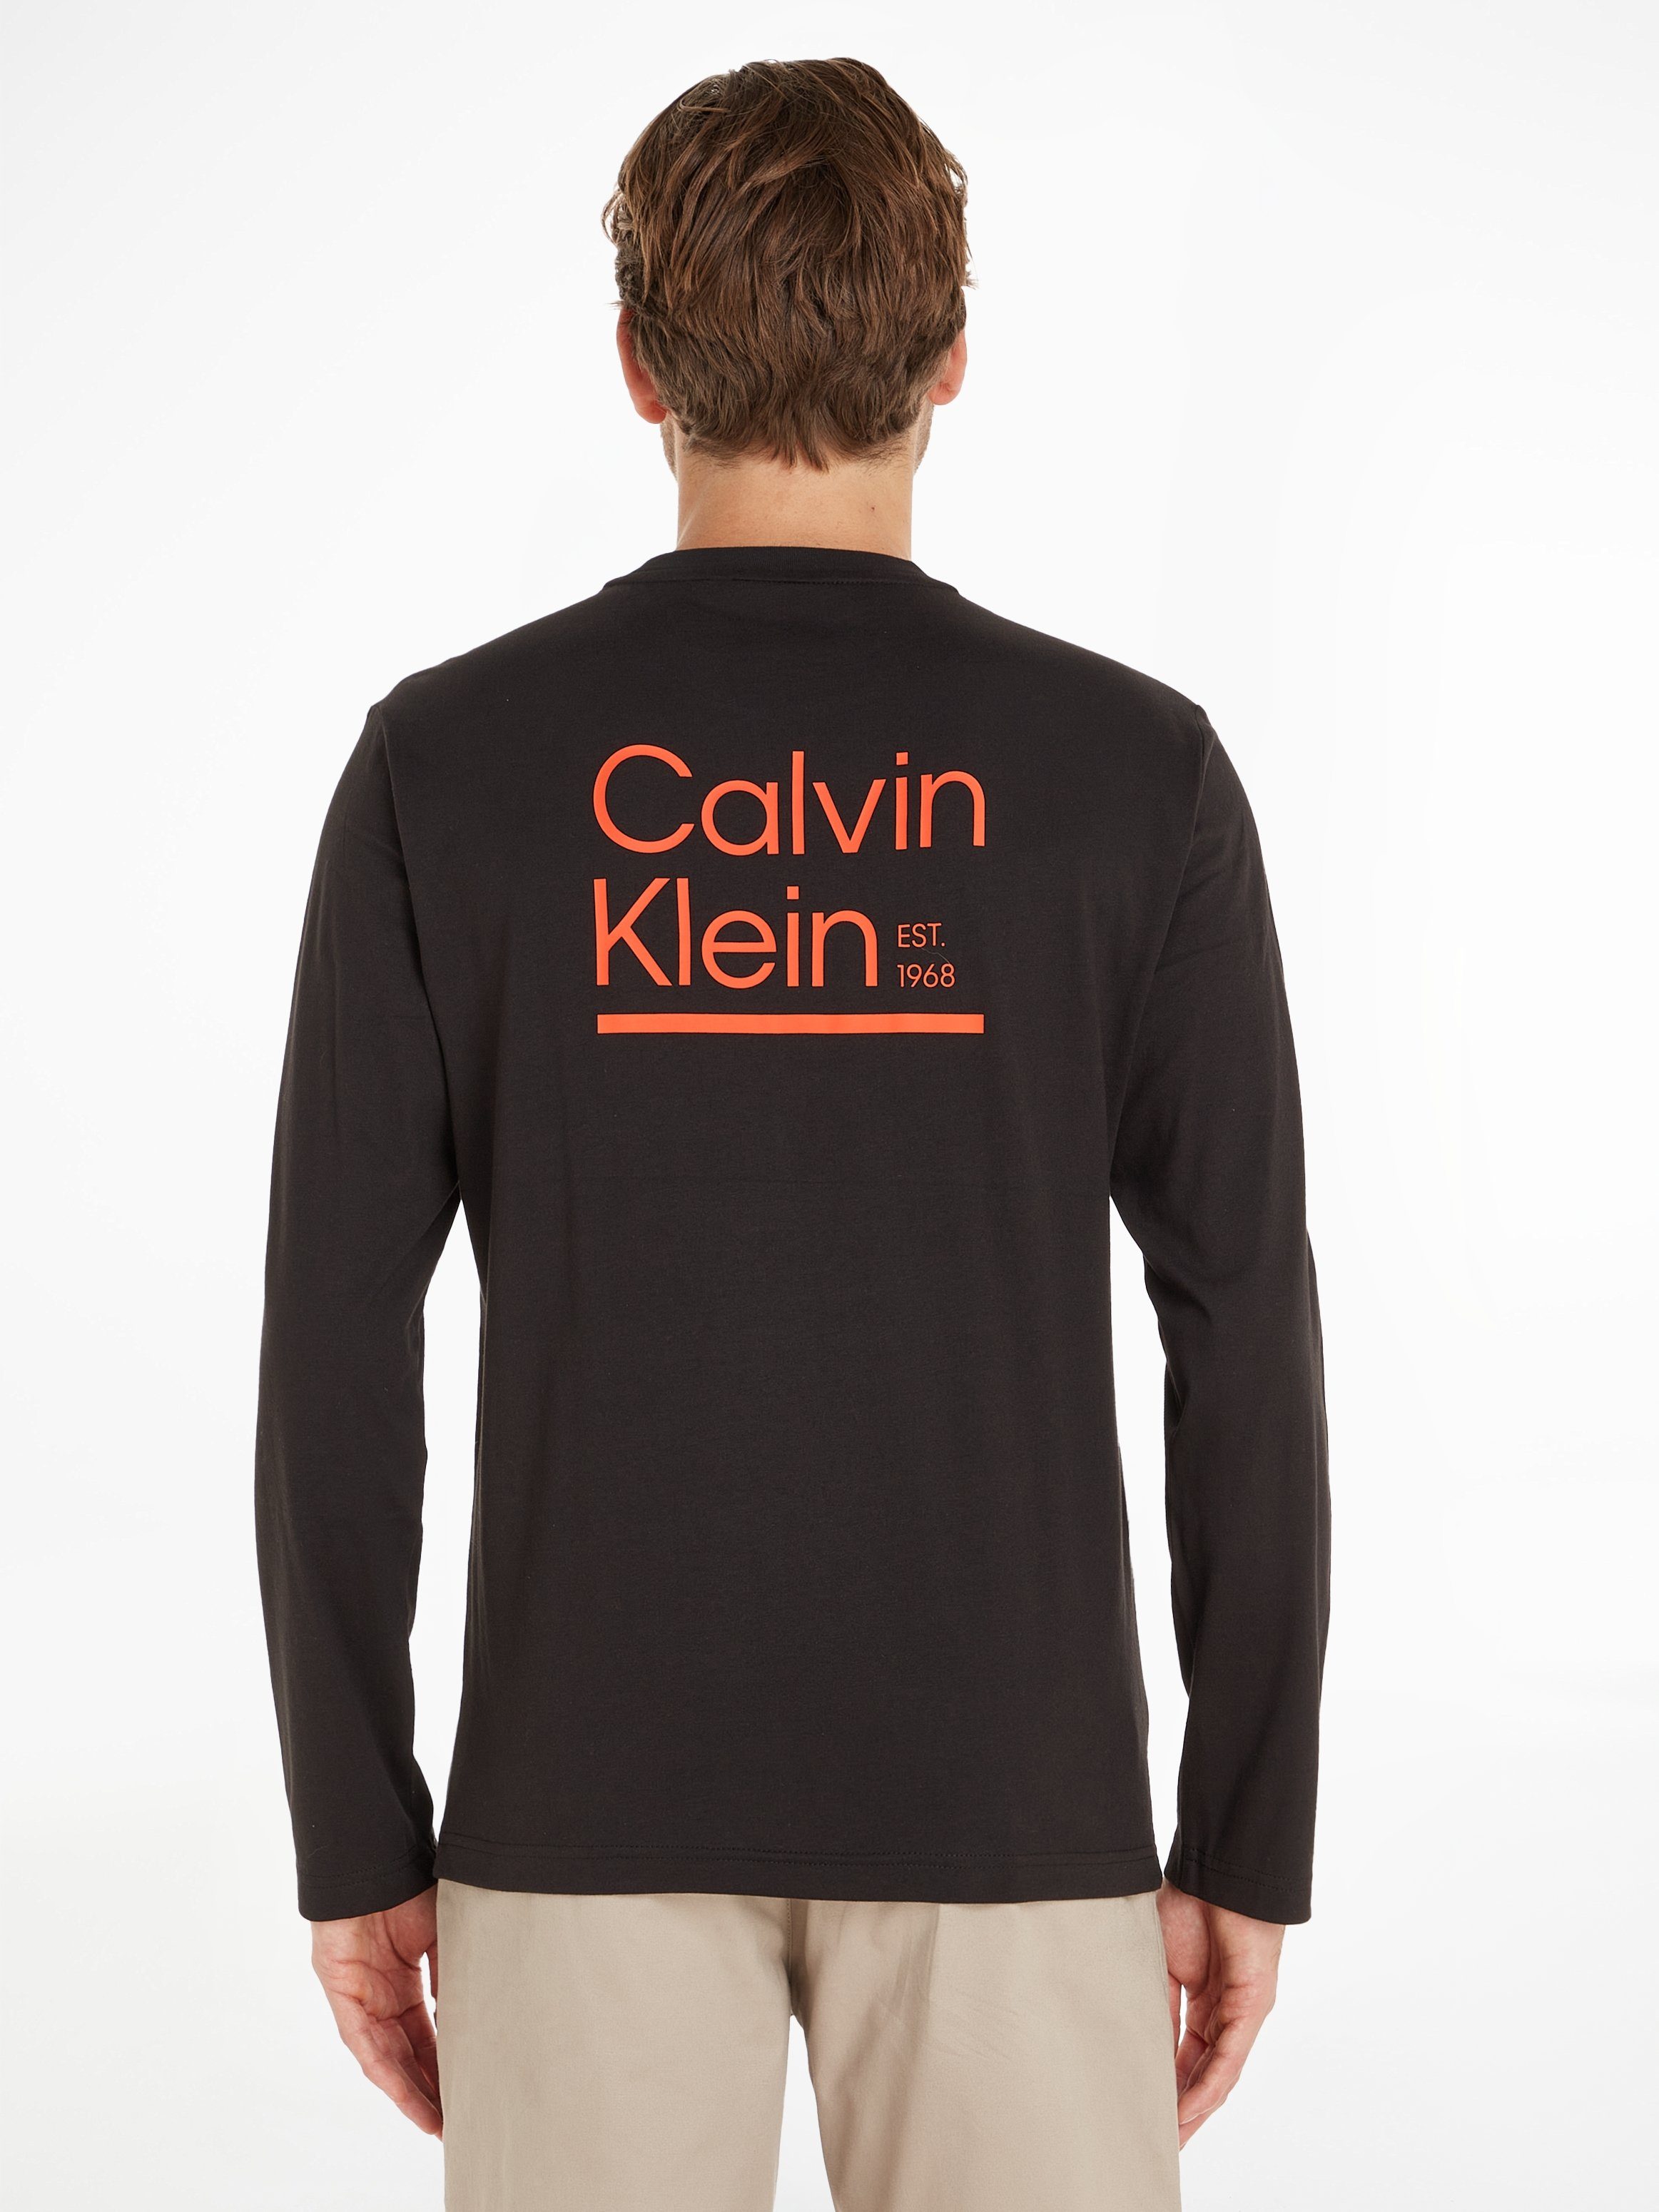 Calvin Klein T-SHIRT LINE mit Langarmshirt CK-Logodruck LOGO CONTRAST LS